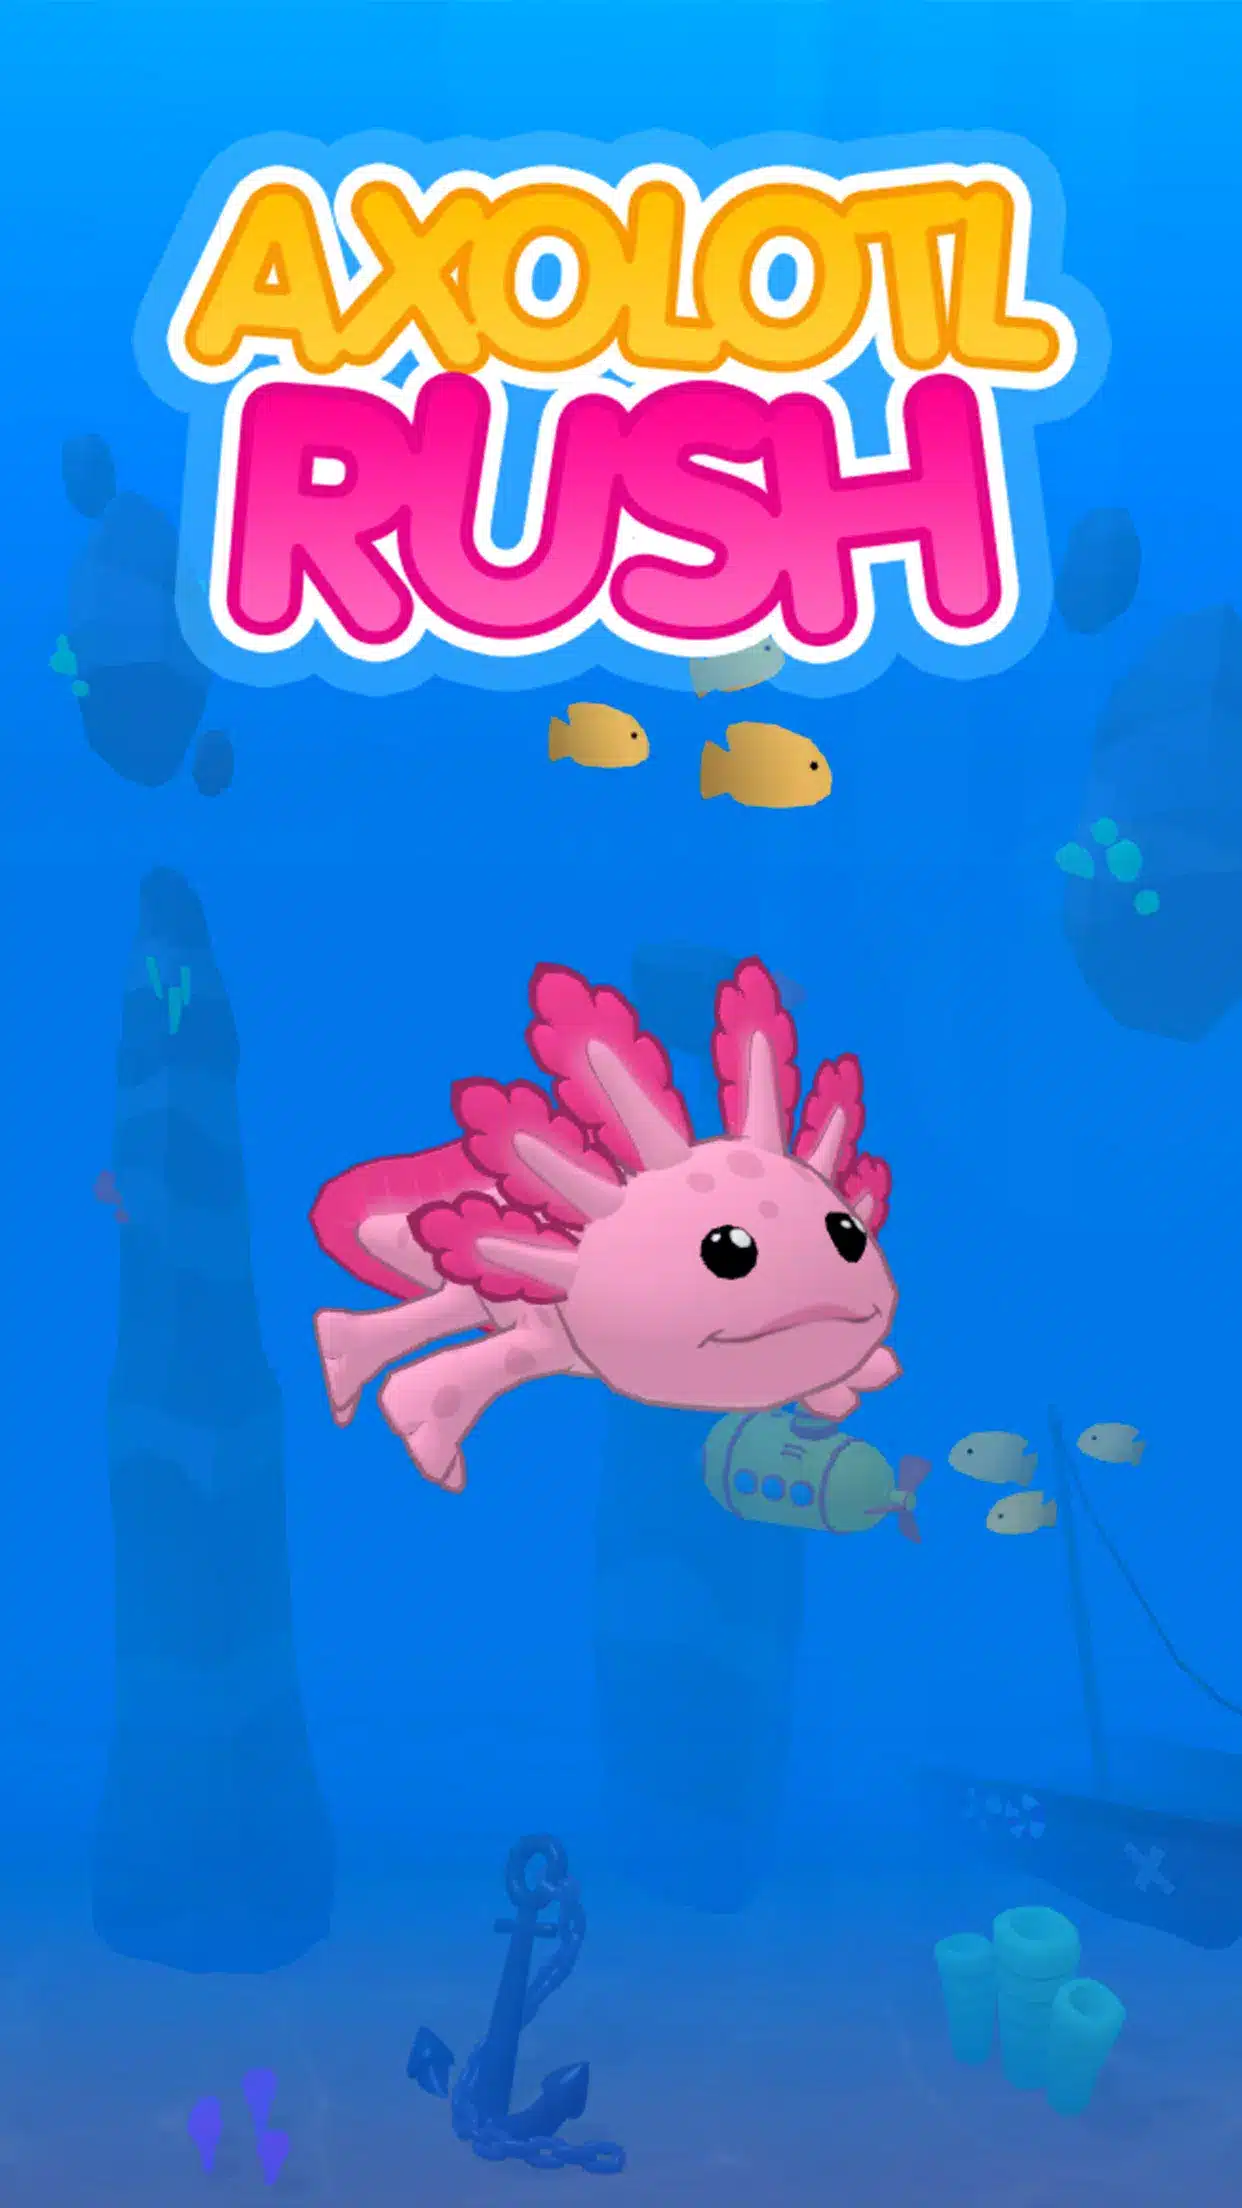 Axolotl Rush Image 1